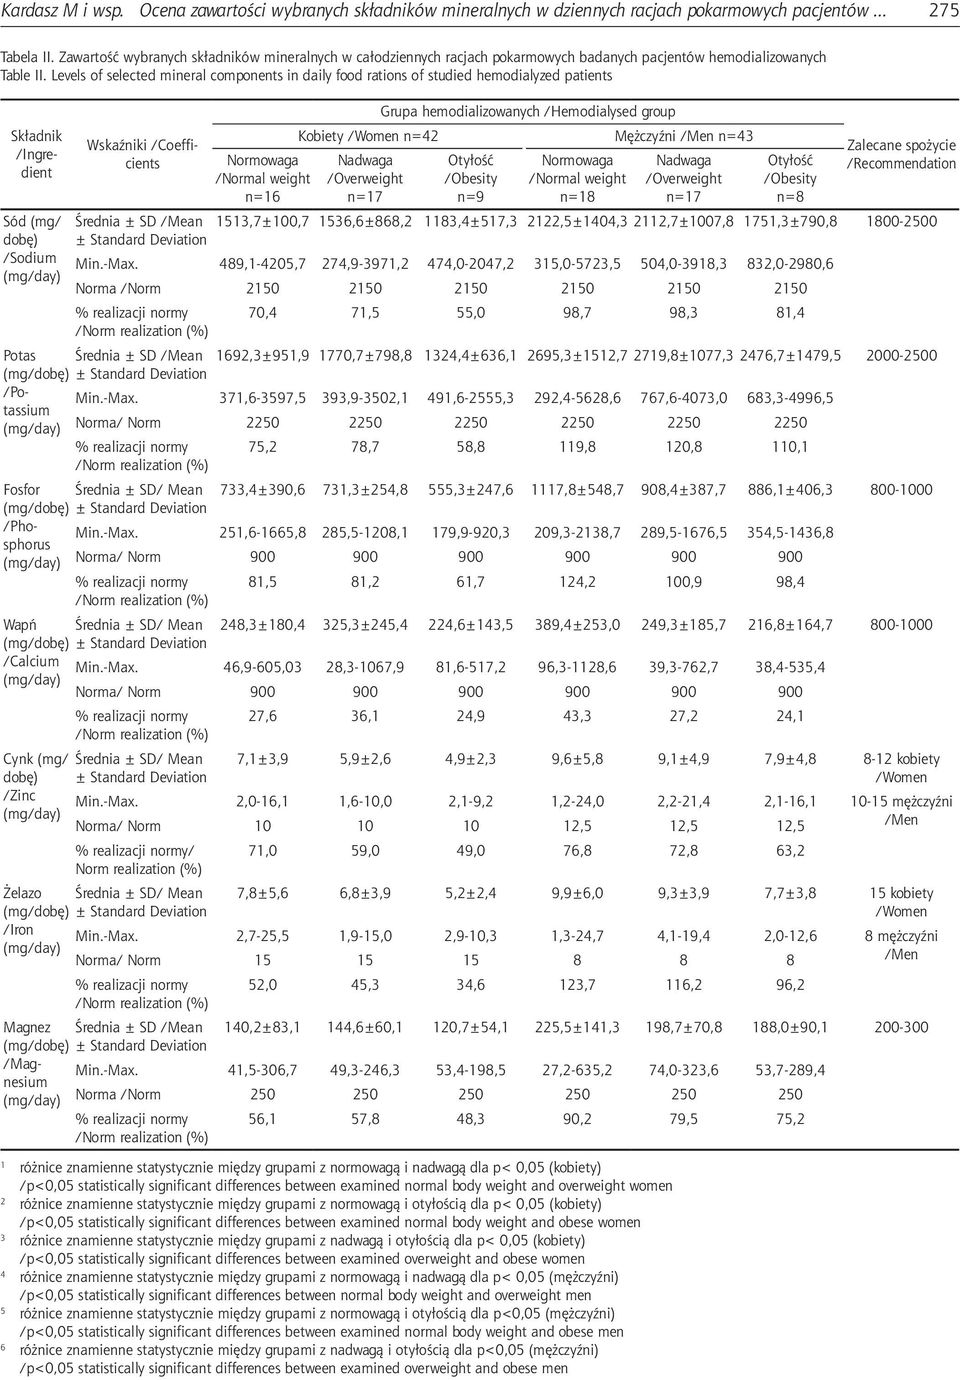 Levels of selected mineral components in daily food rations of studied hemodialyzed patients Składnik /Ingredient Sód (mg/ dobę) /Sodium Wskaźniki /Coefficients Średnia ± SD /Mean ± Standard